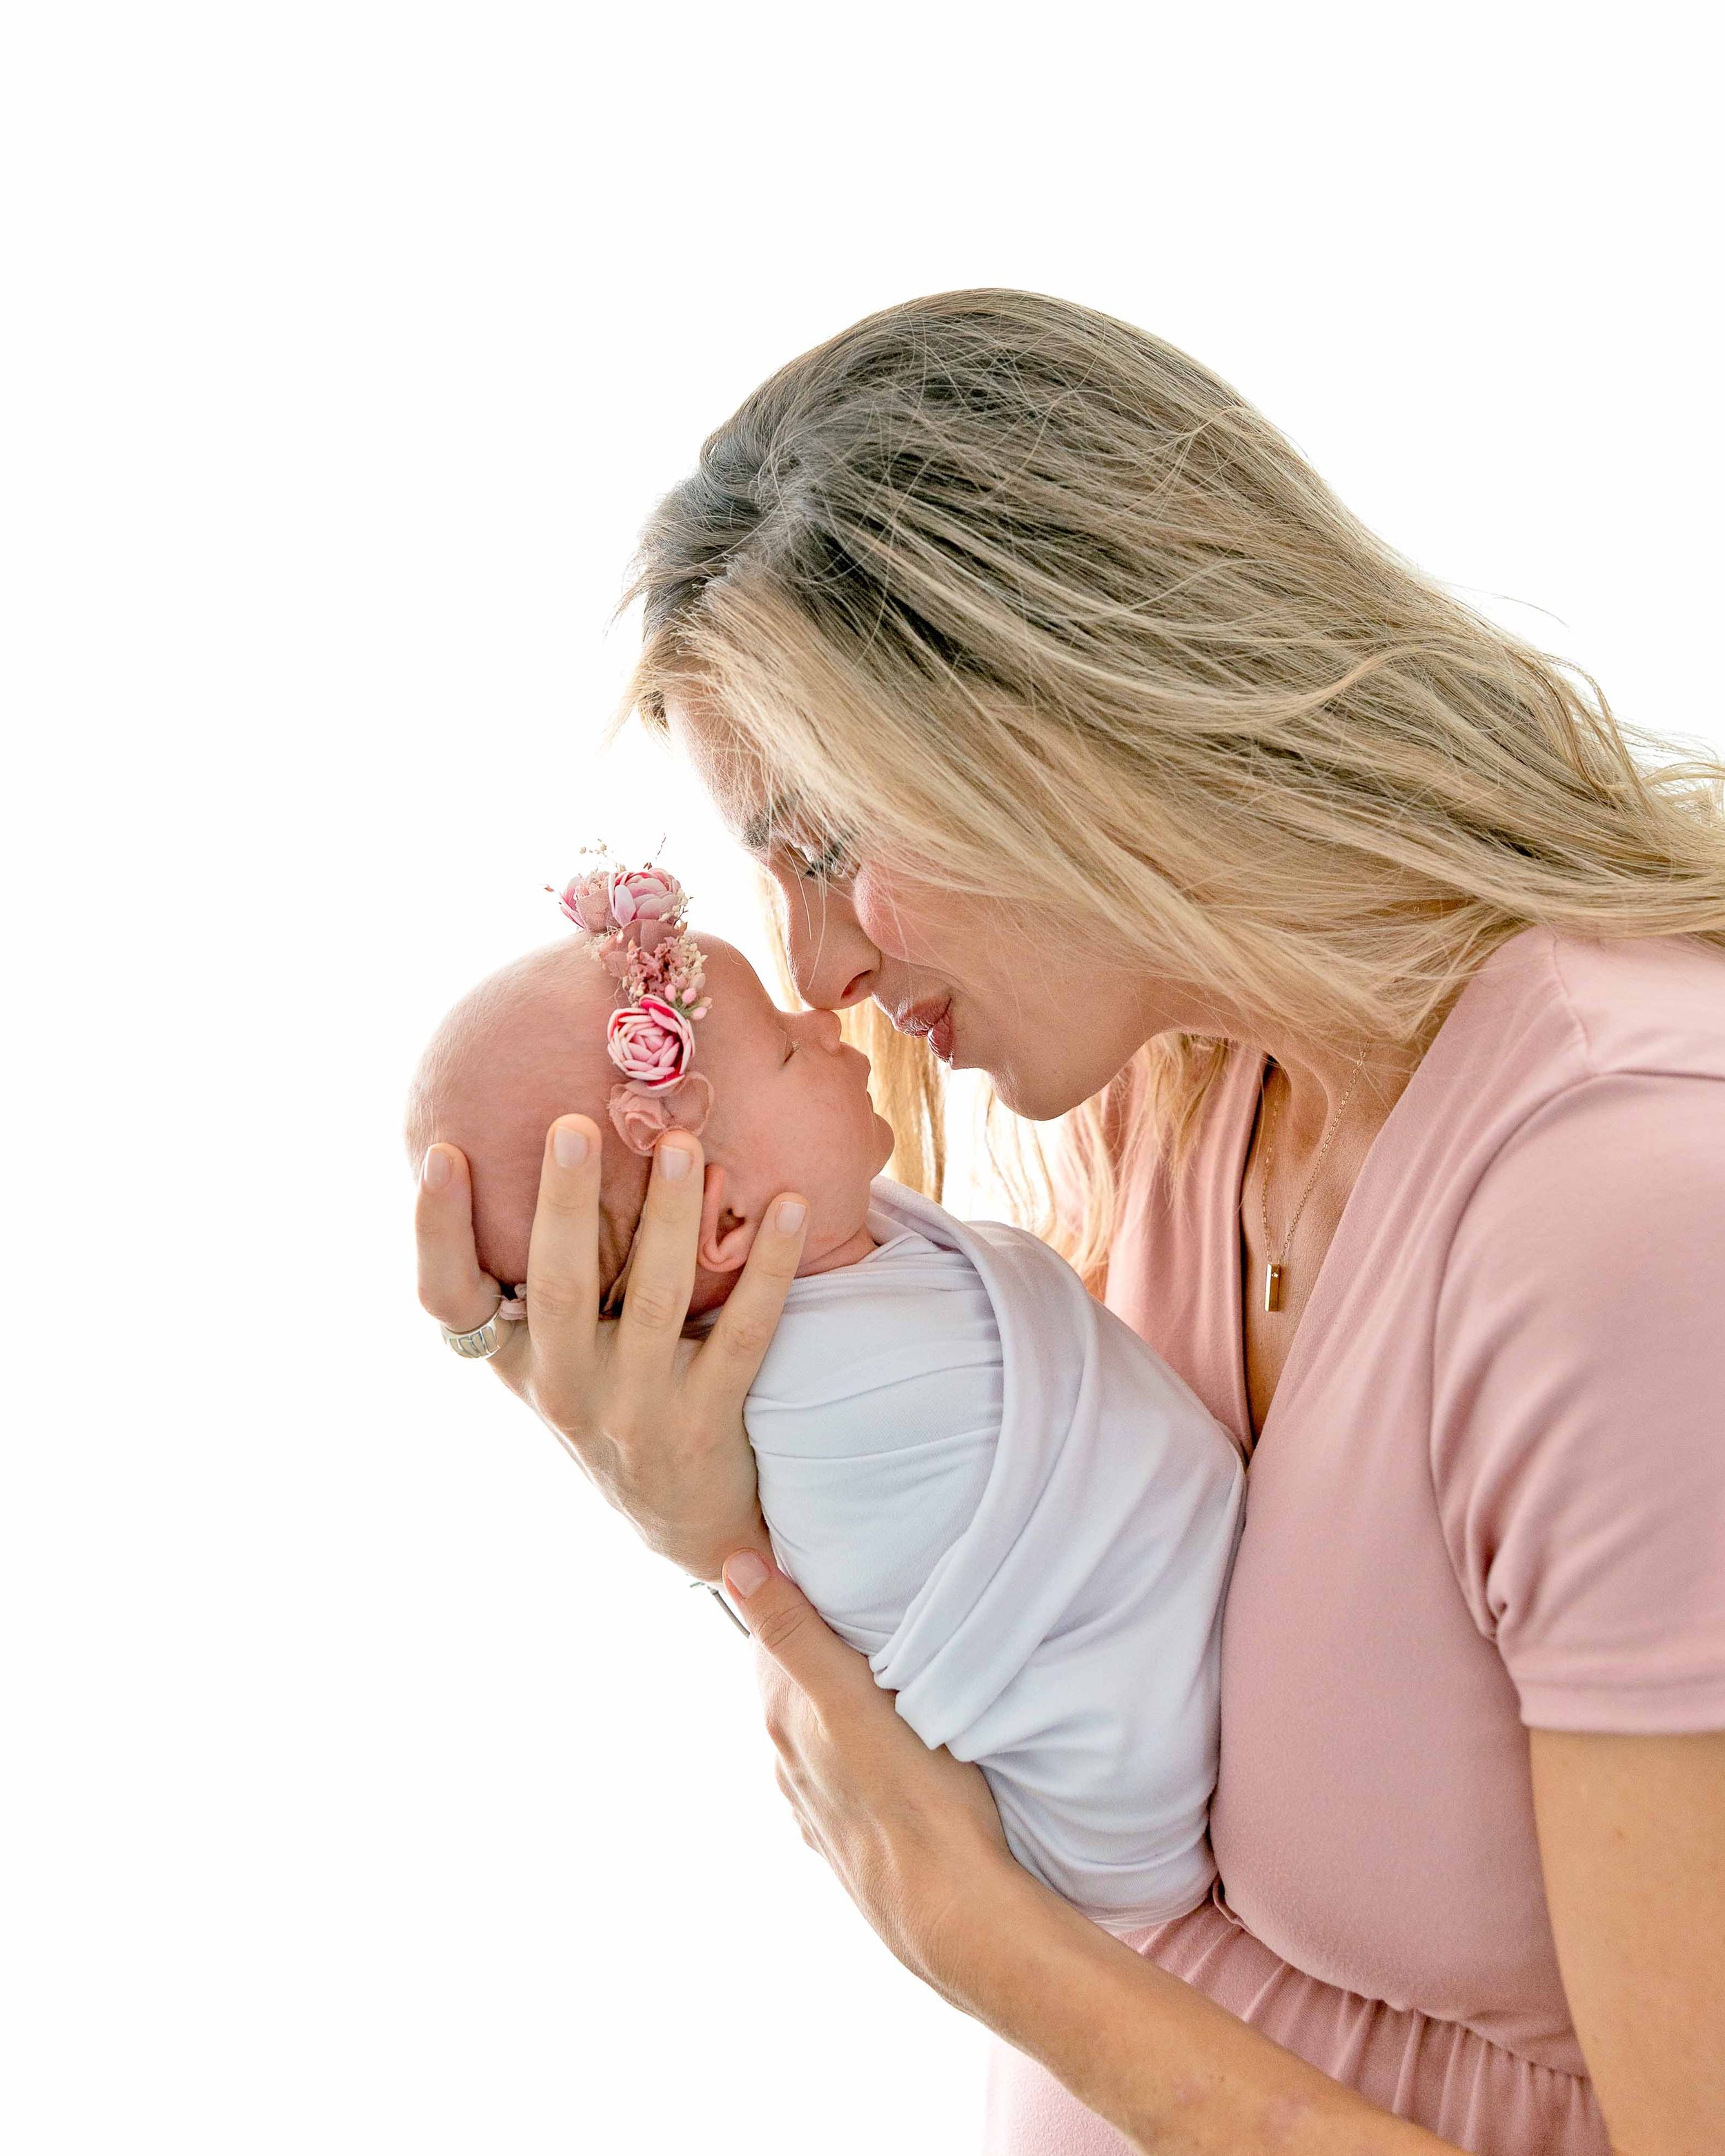 Baby-girl-photos-infant-images-Newborn-Photography-spokane-washinton-3.jpg